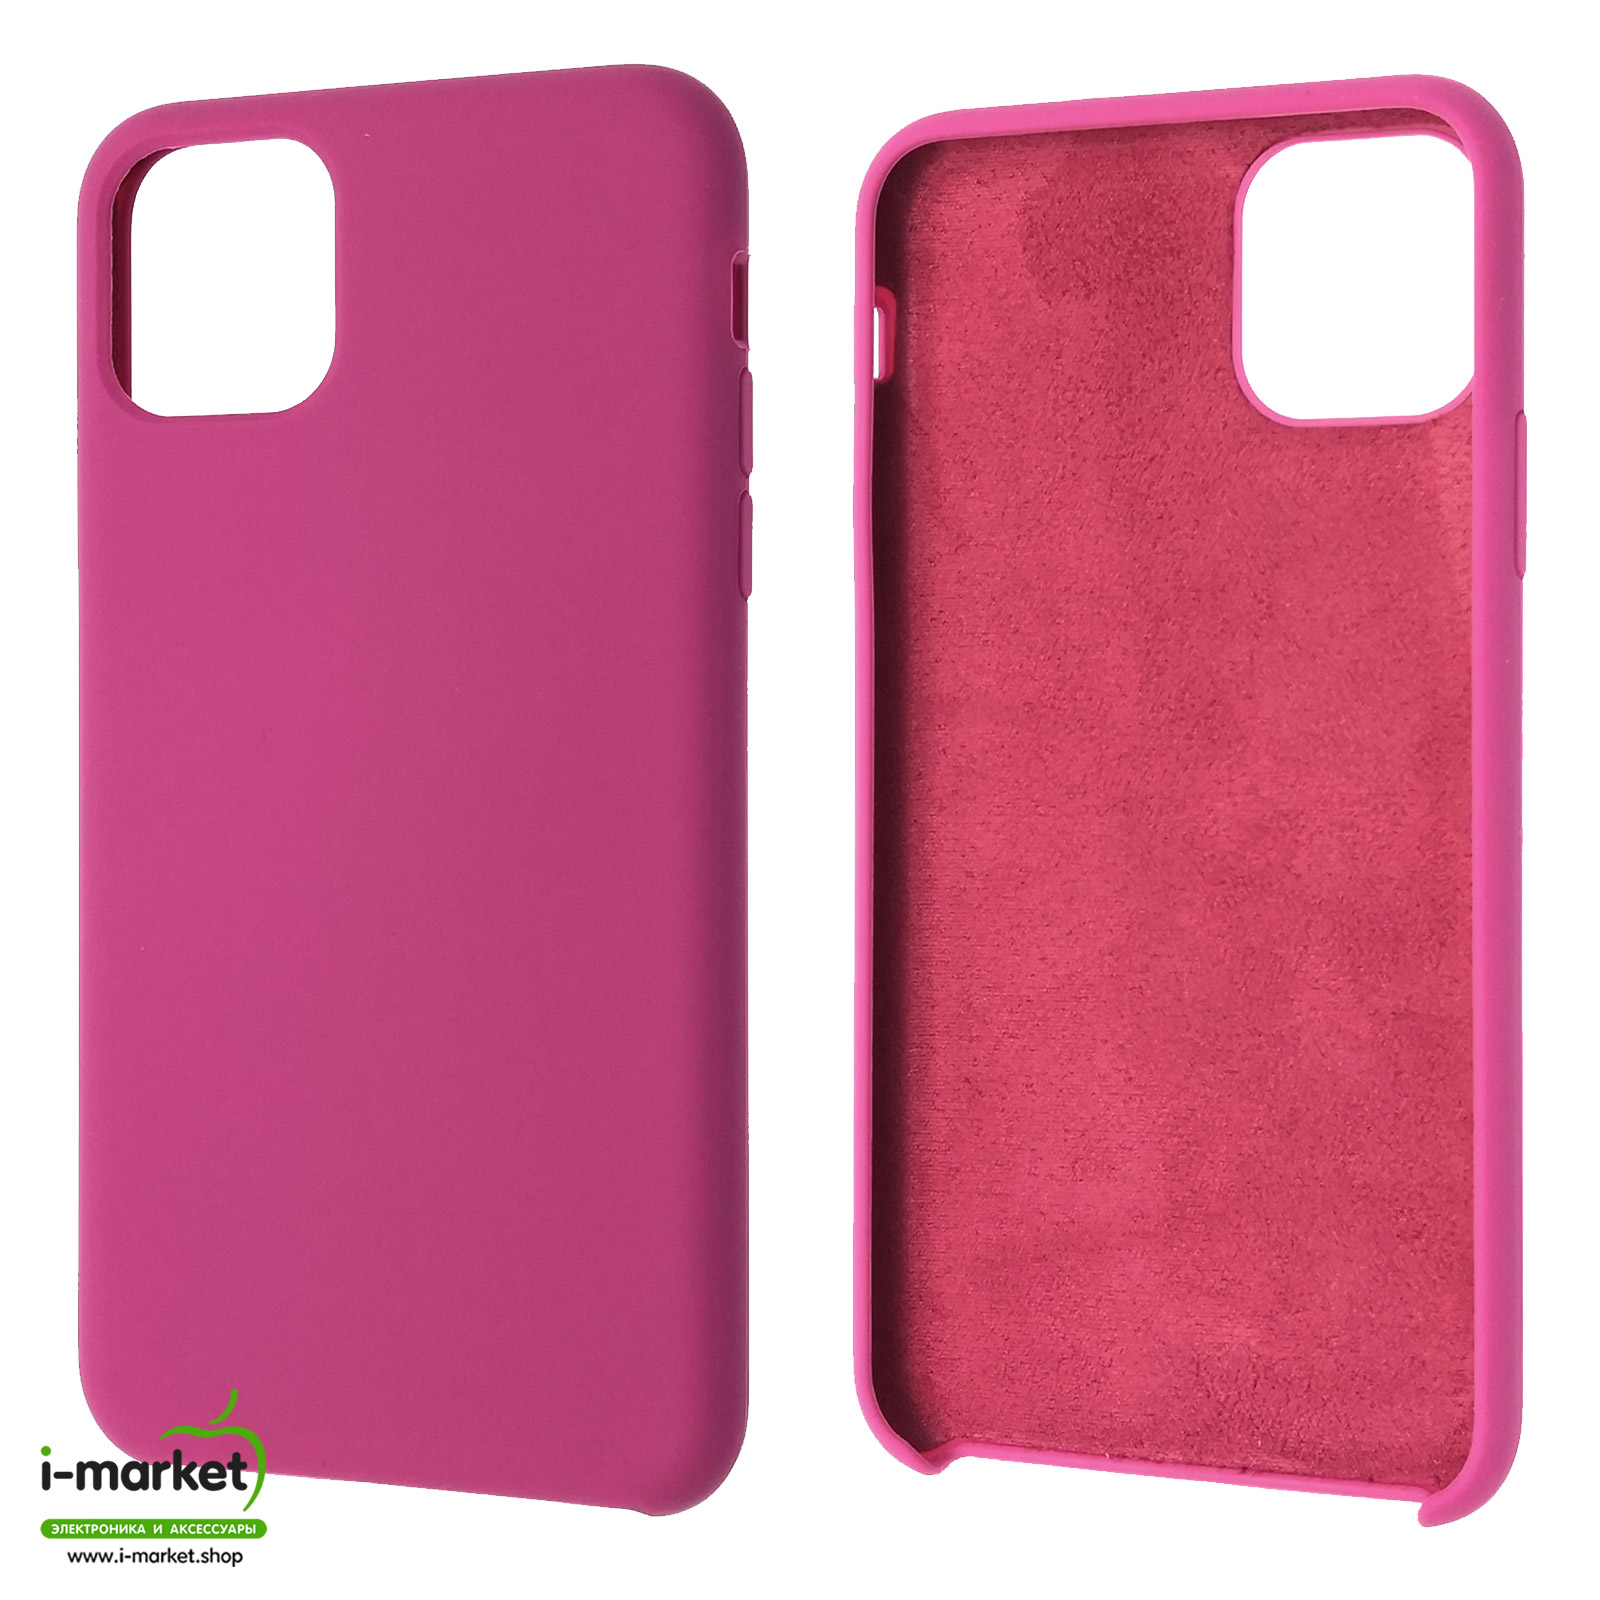 Чехол накладка Silicon Case для APPLE iPhone 11 Pro MAX, силикон, бархат, цвет пурпурный